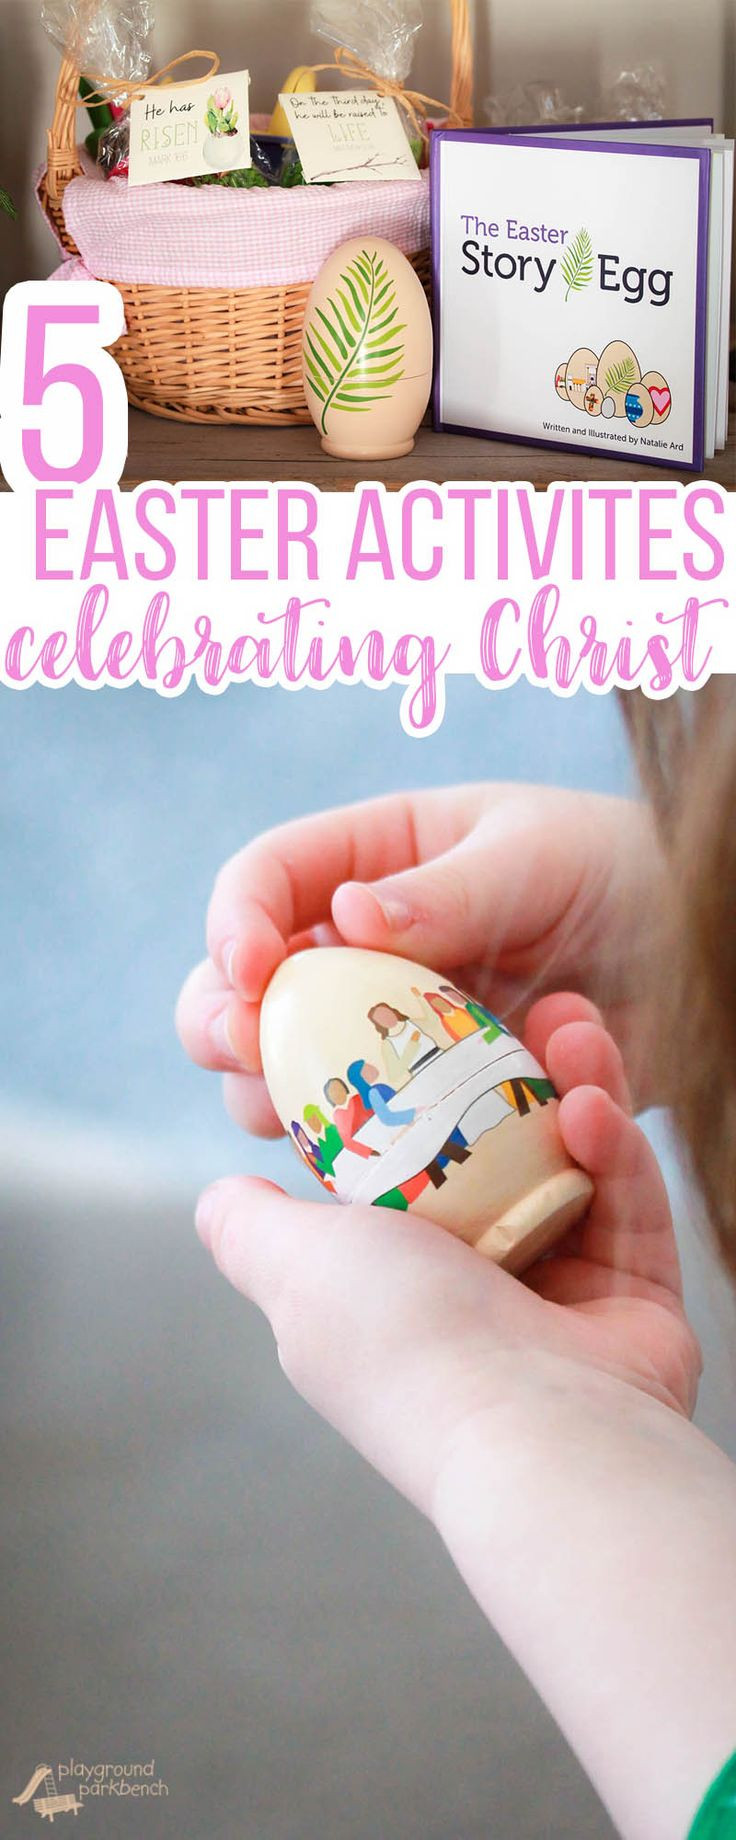 Christian School Easter Party Ideas
 Best 25 Christian easter ideas on Pinterest